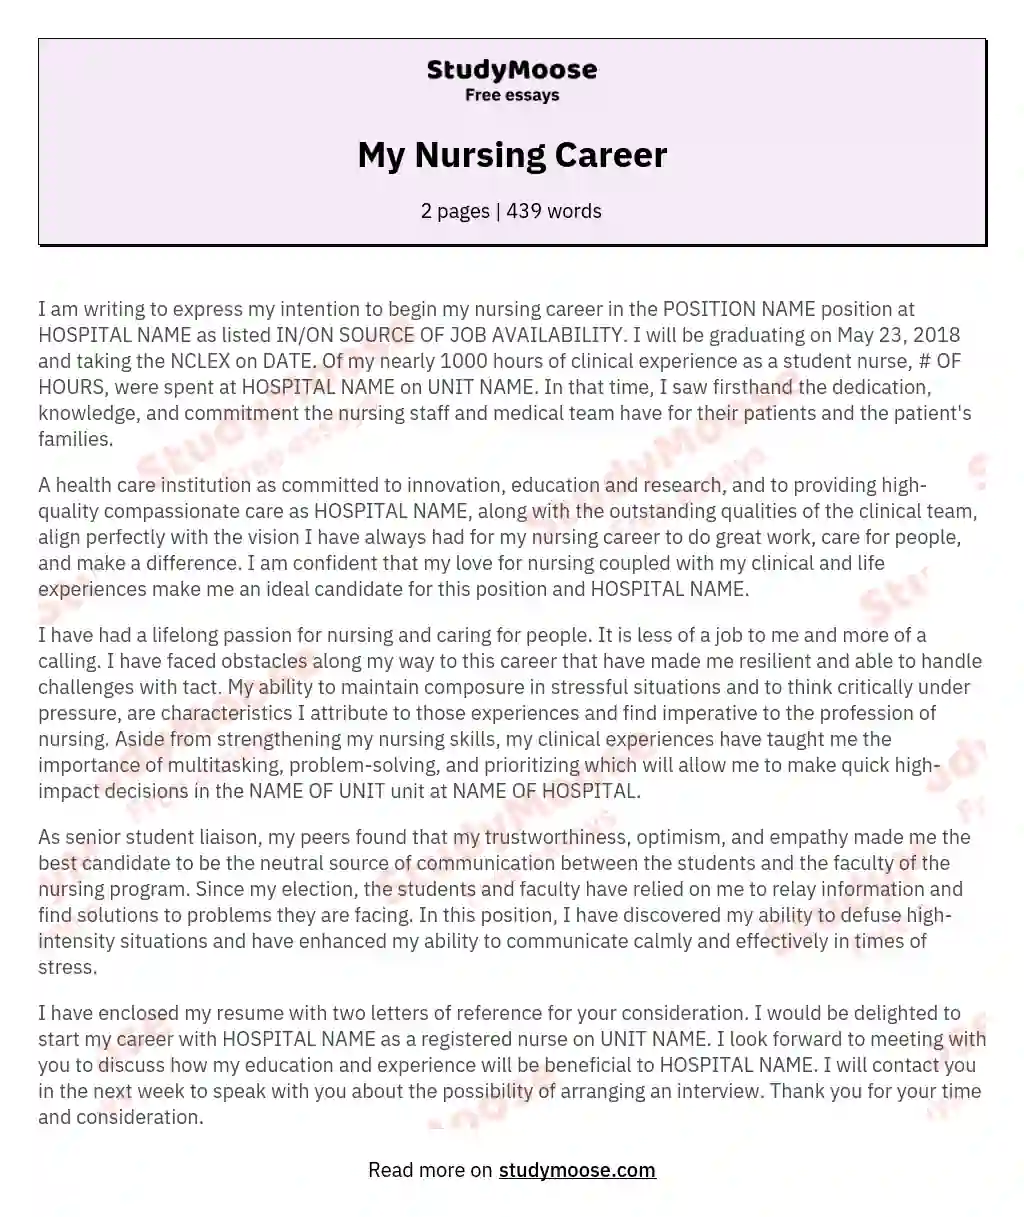 My Nursing Career essay